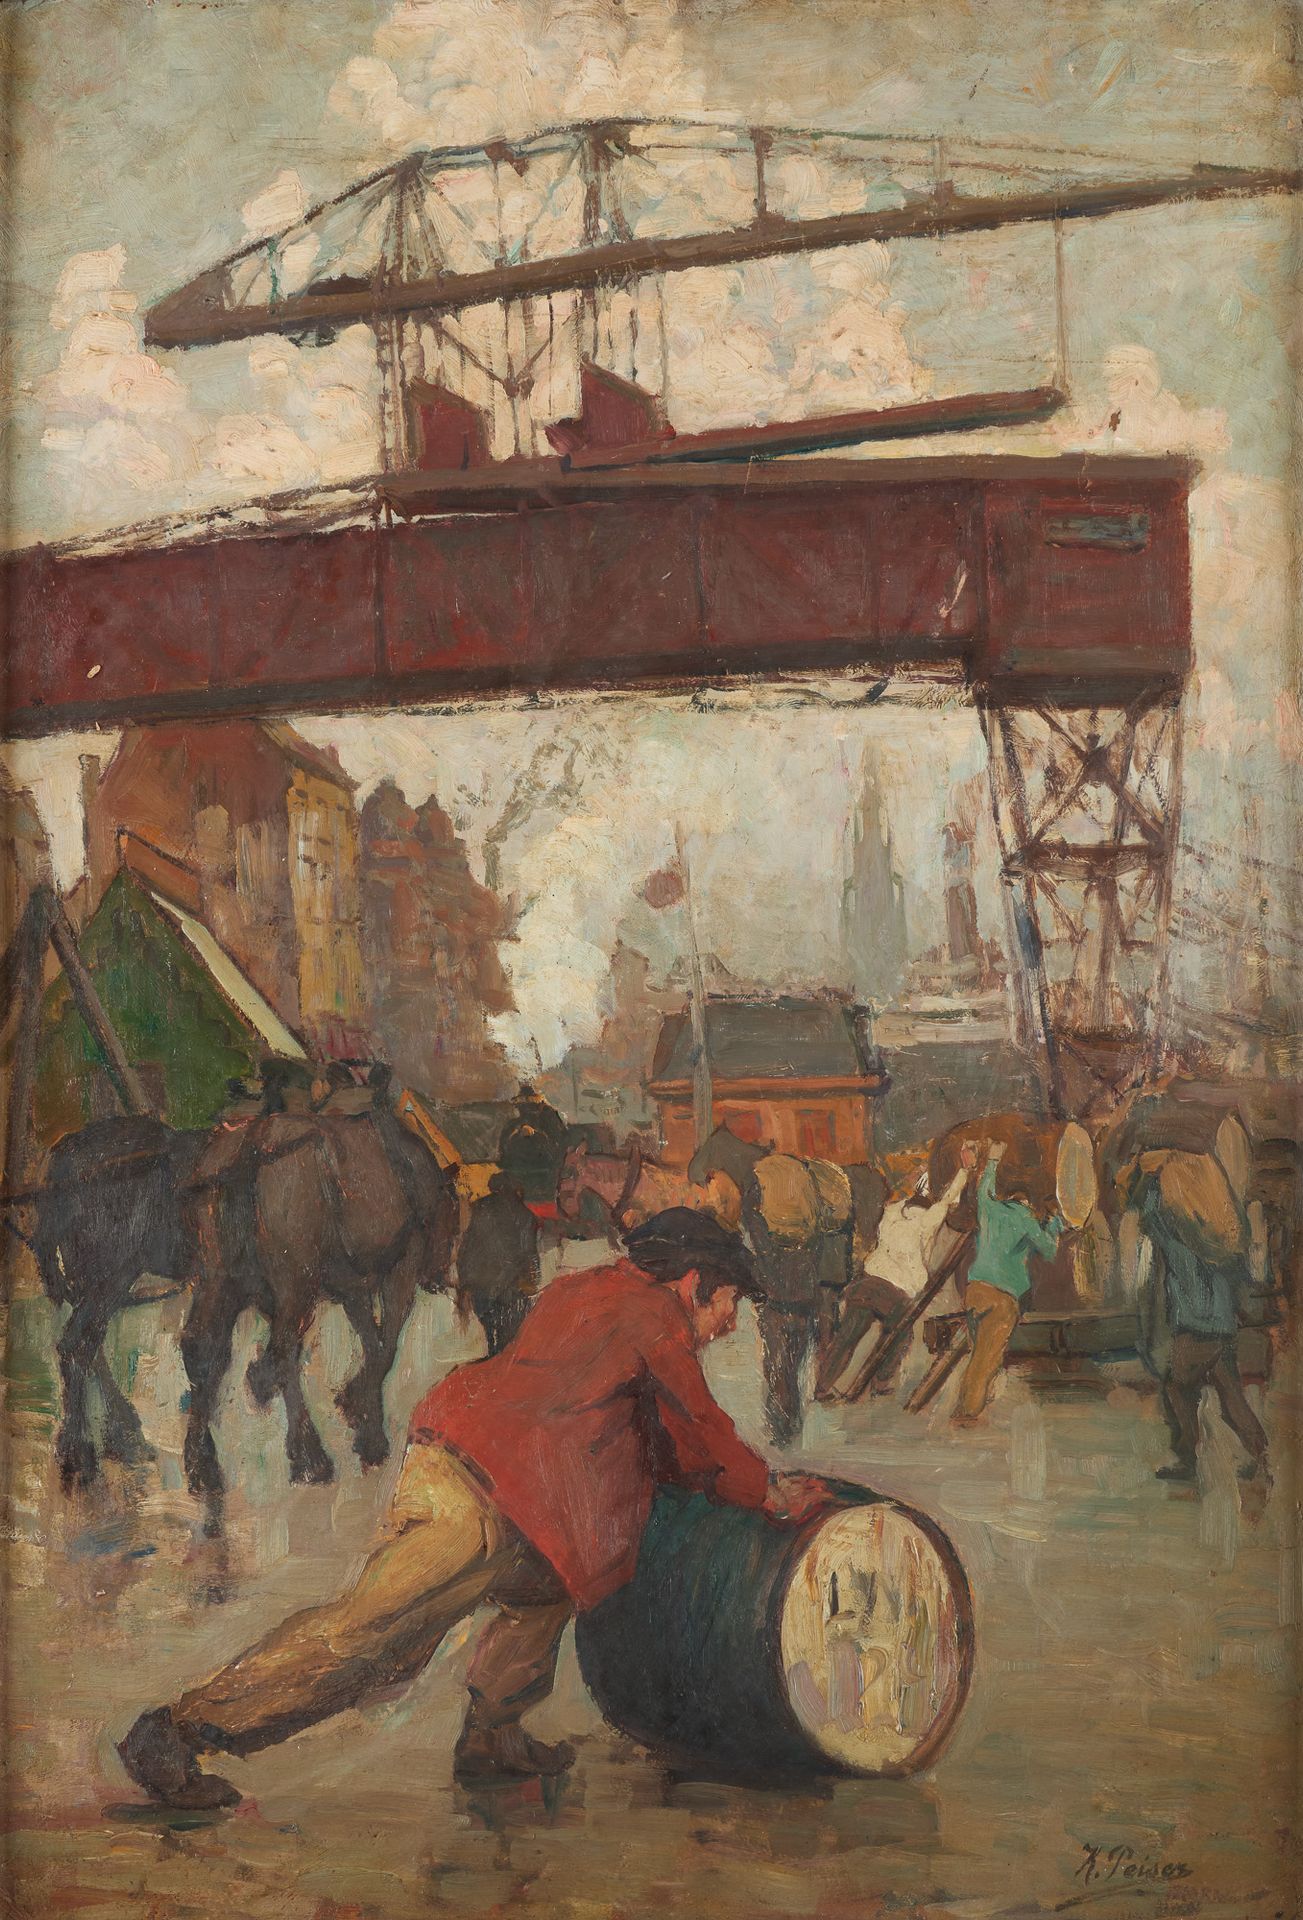 Kurt PEISER École belge (1887-1962). Olio su tavola: Veduta animata del porto.

&hellip;